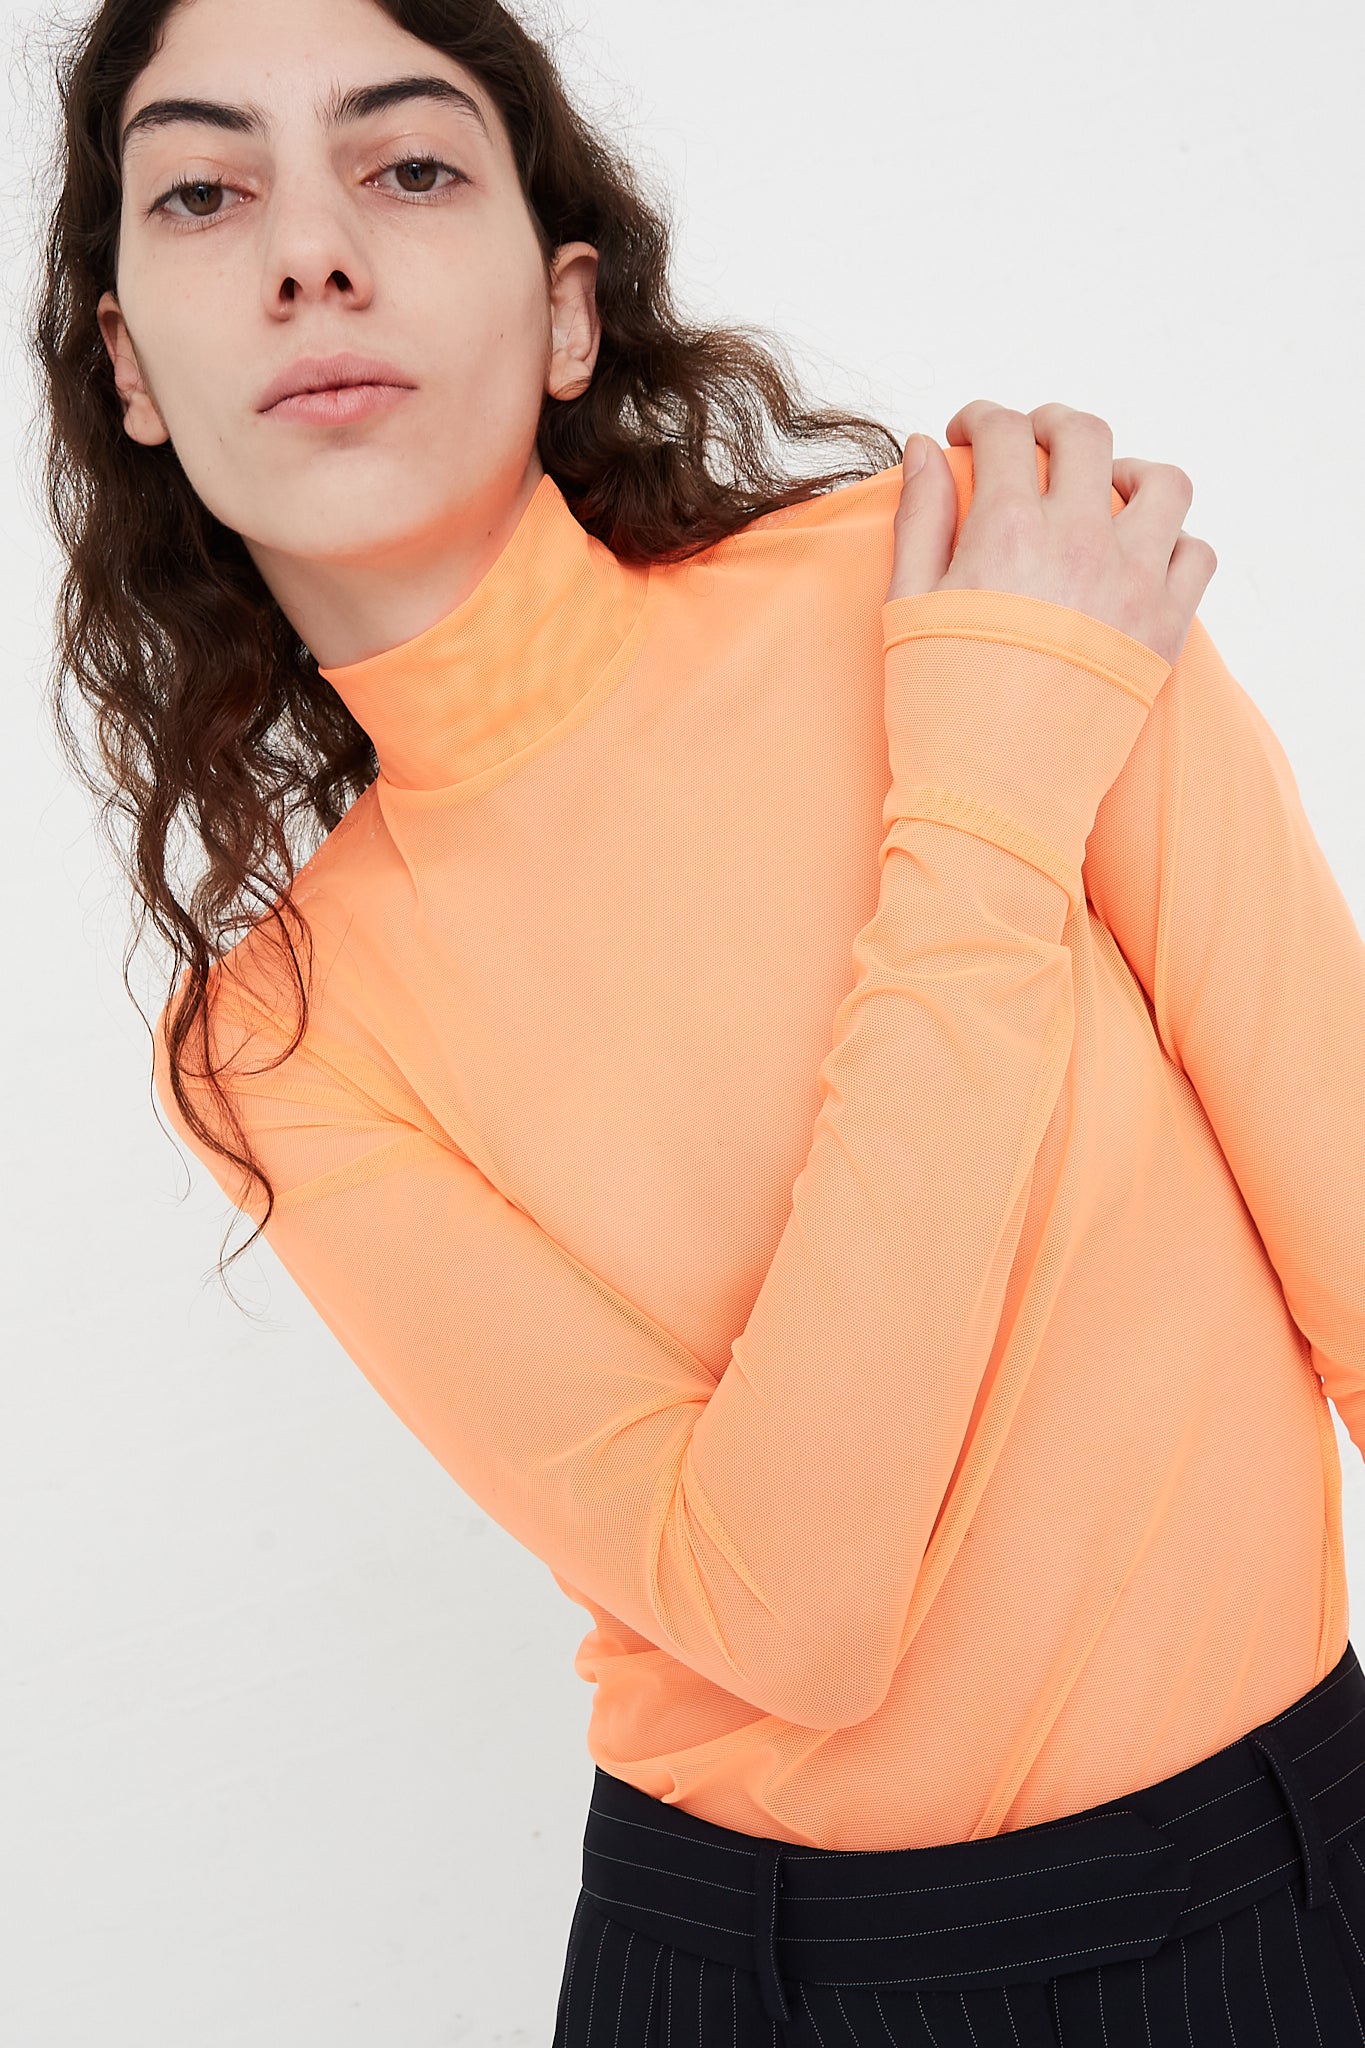 A model wearing a Long Sleeve Mesh Mockneck in Fluoro Orange designed by NOMIA brand.